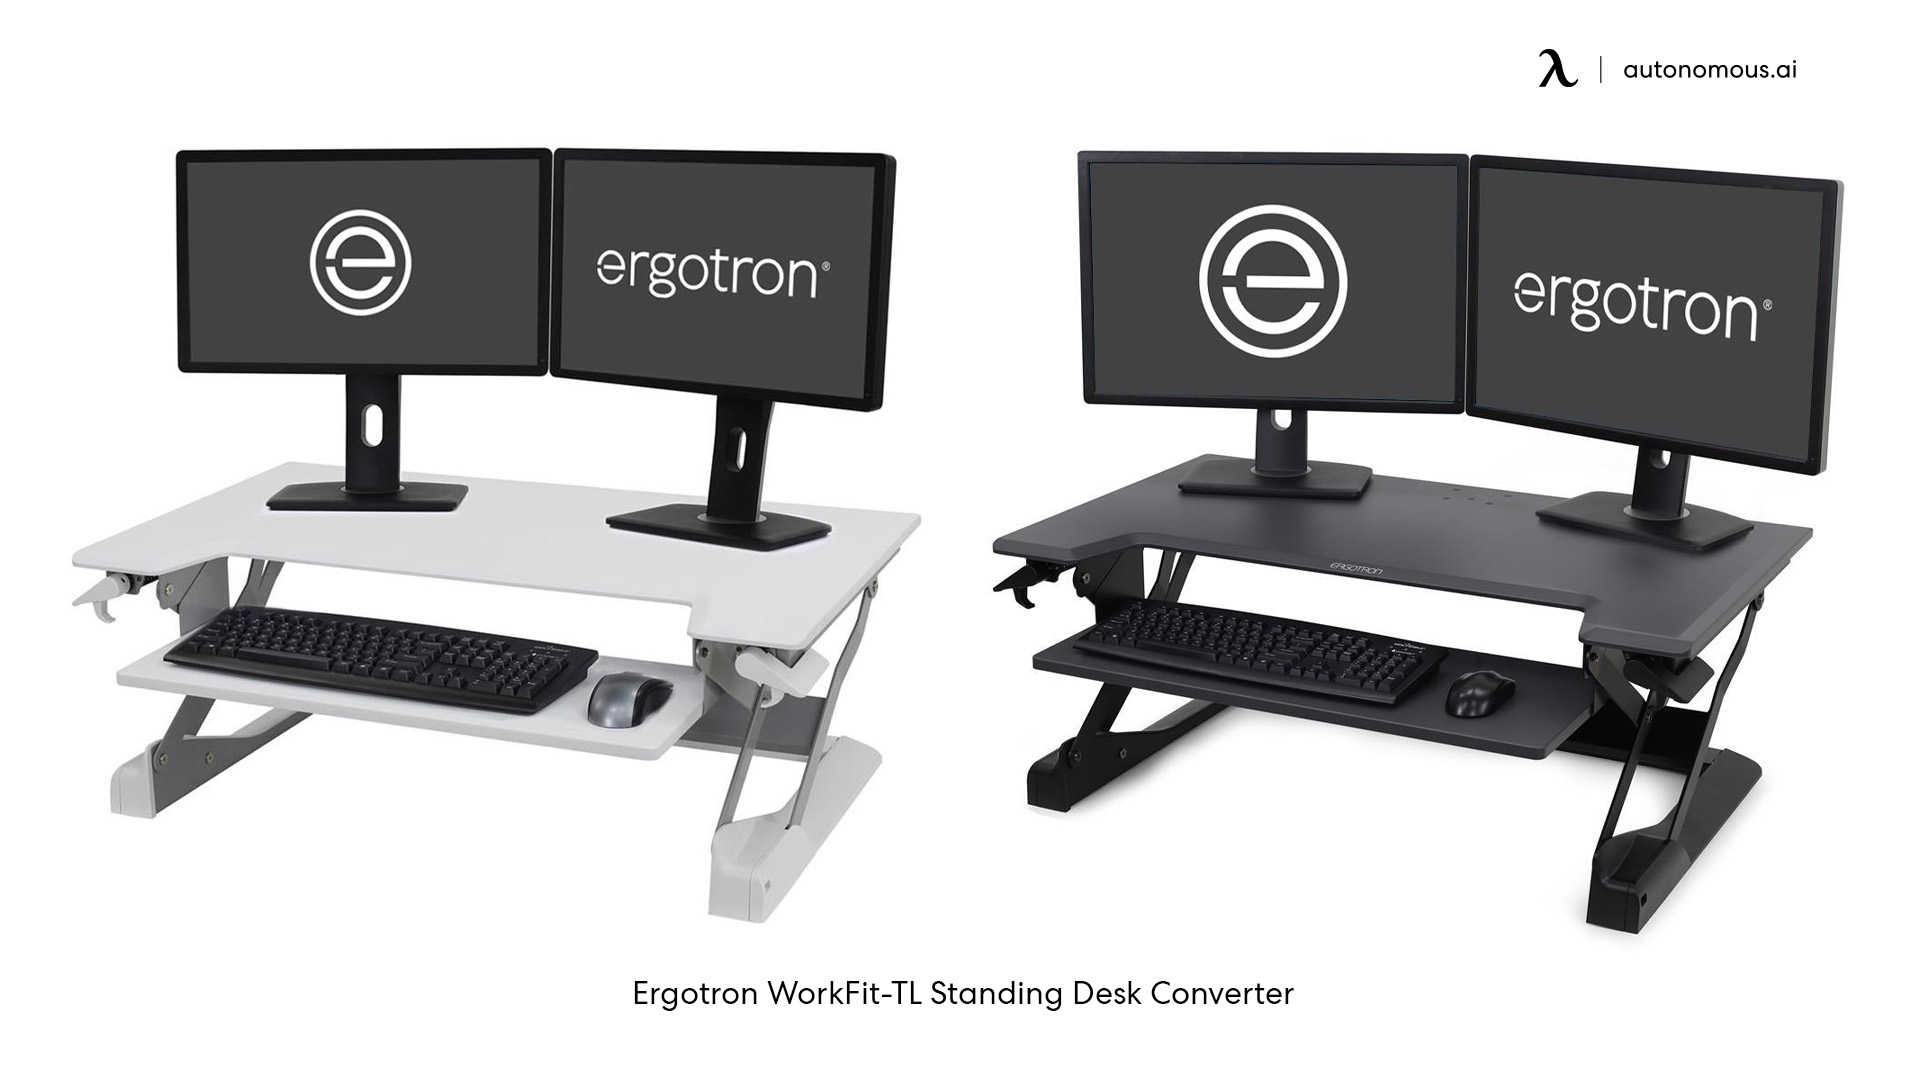 Ergotron WorkFit-TL Standing Desk Converter